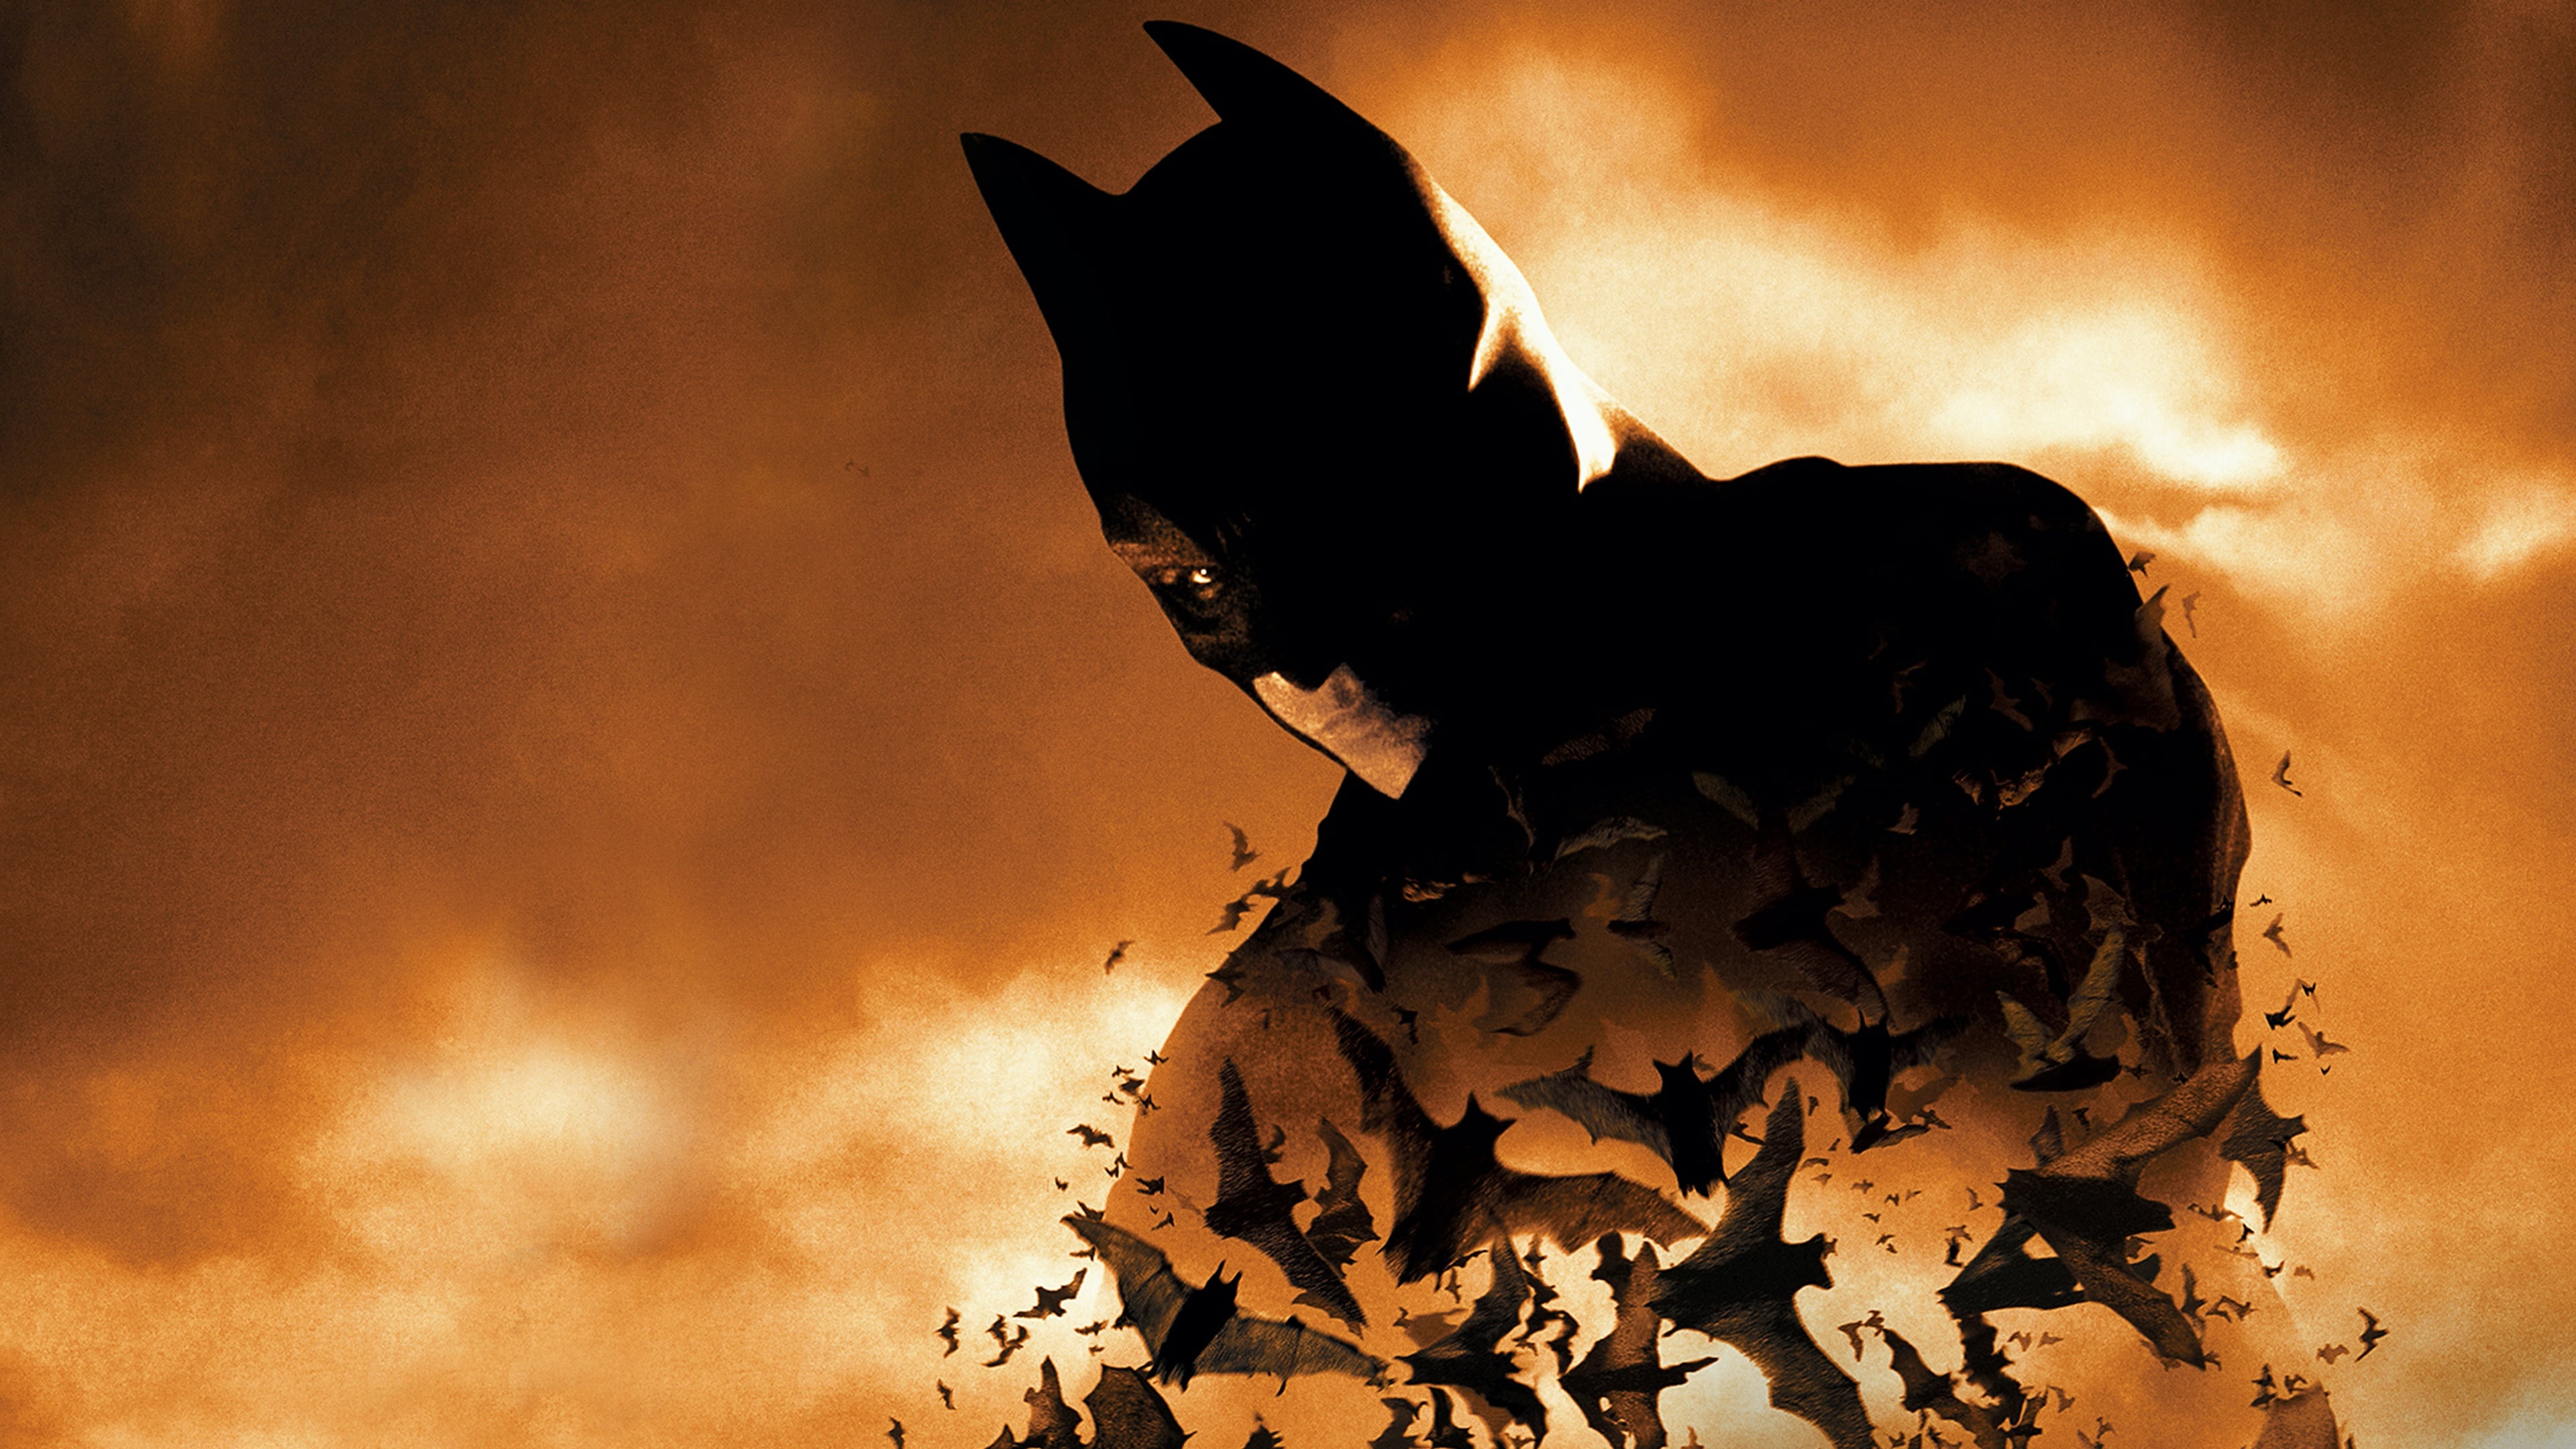 Christian Bale: Batman Begins, a 2005 superhero film. 3840x2160 4K Wallpaper.